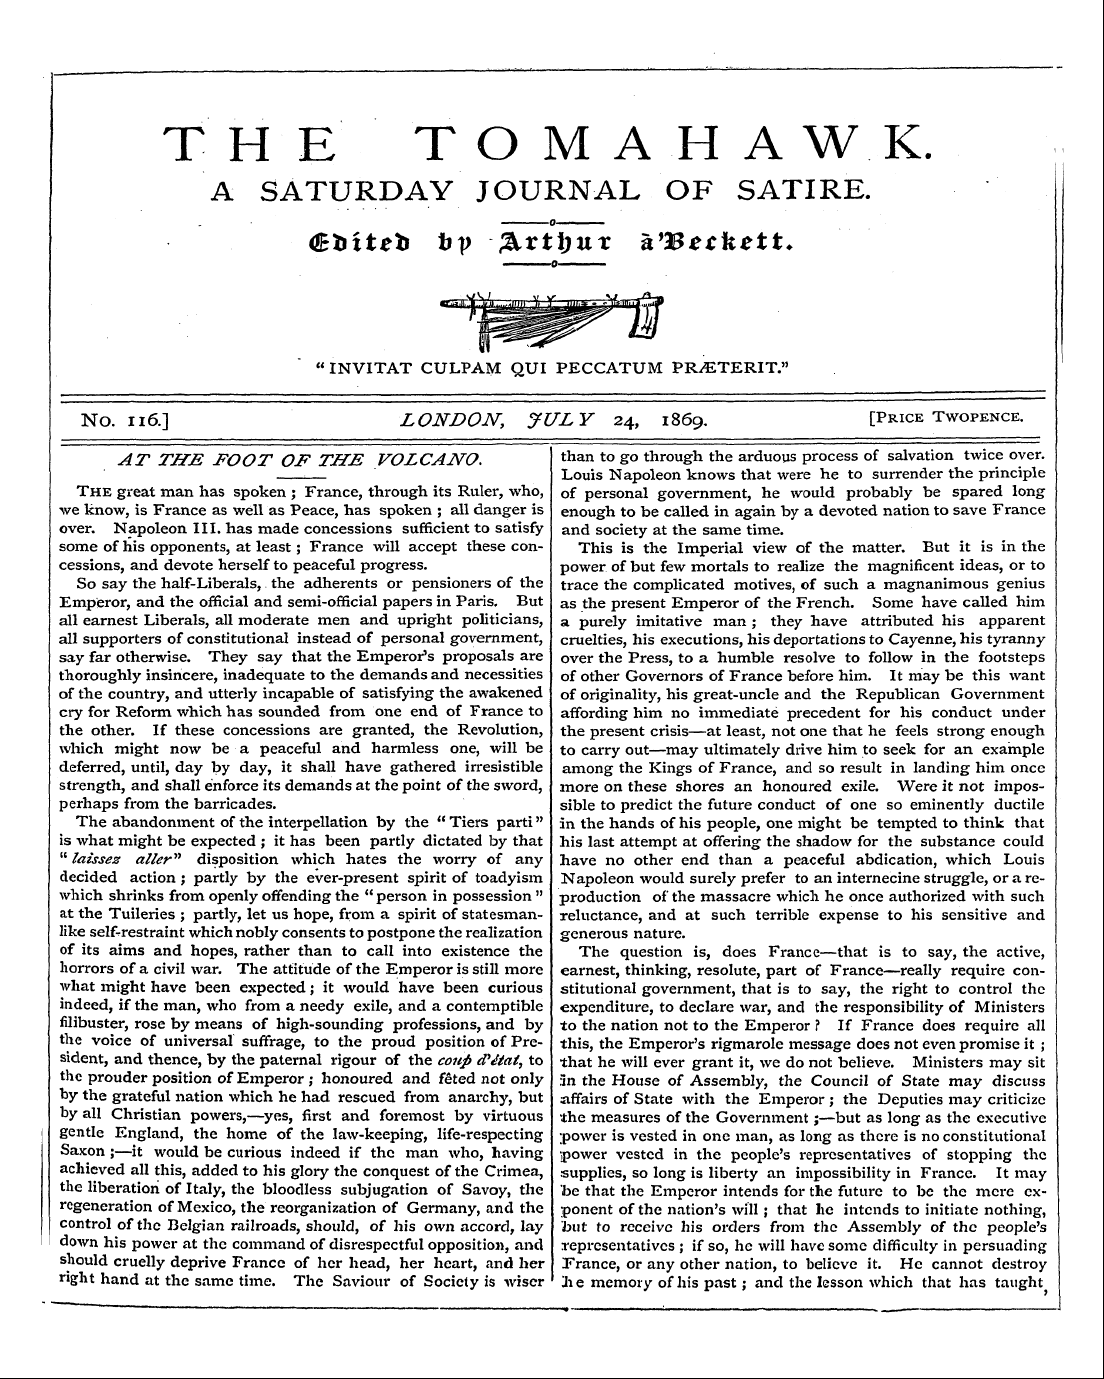 Tomahawk (1867-1870): jS F Y, 1st edition - The T O M A H A W K. A Saturday Journal ...